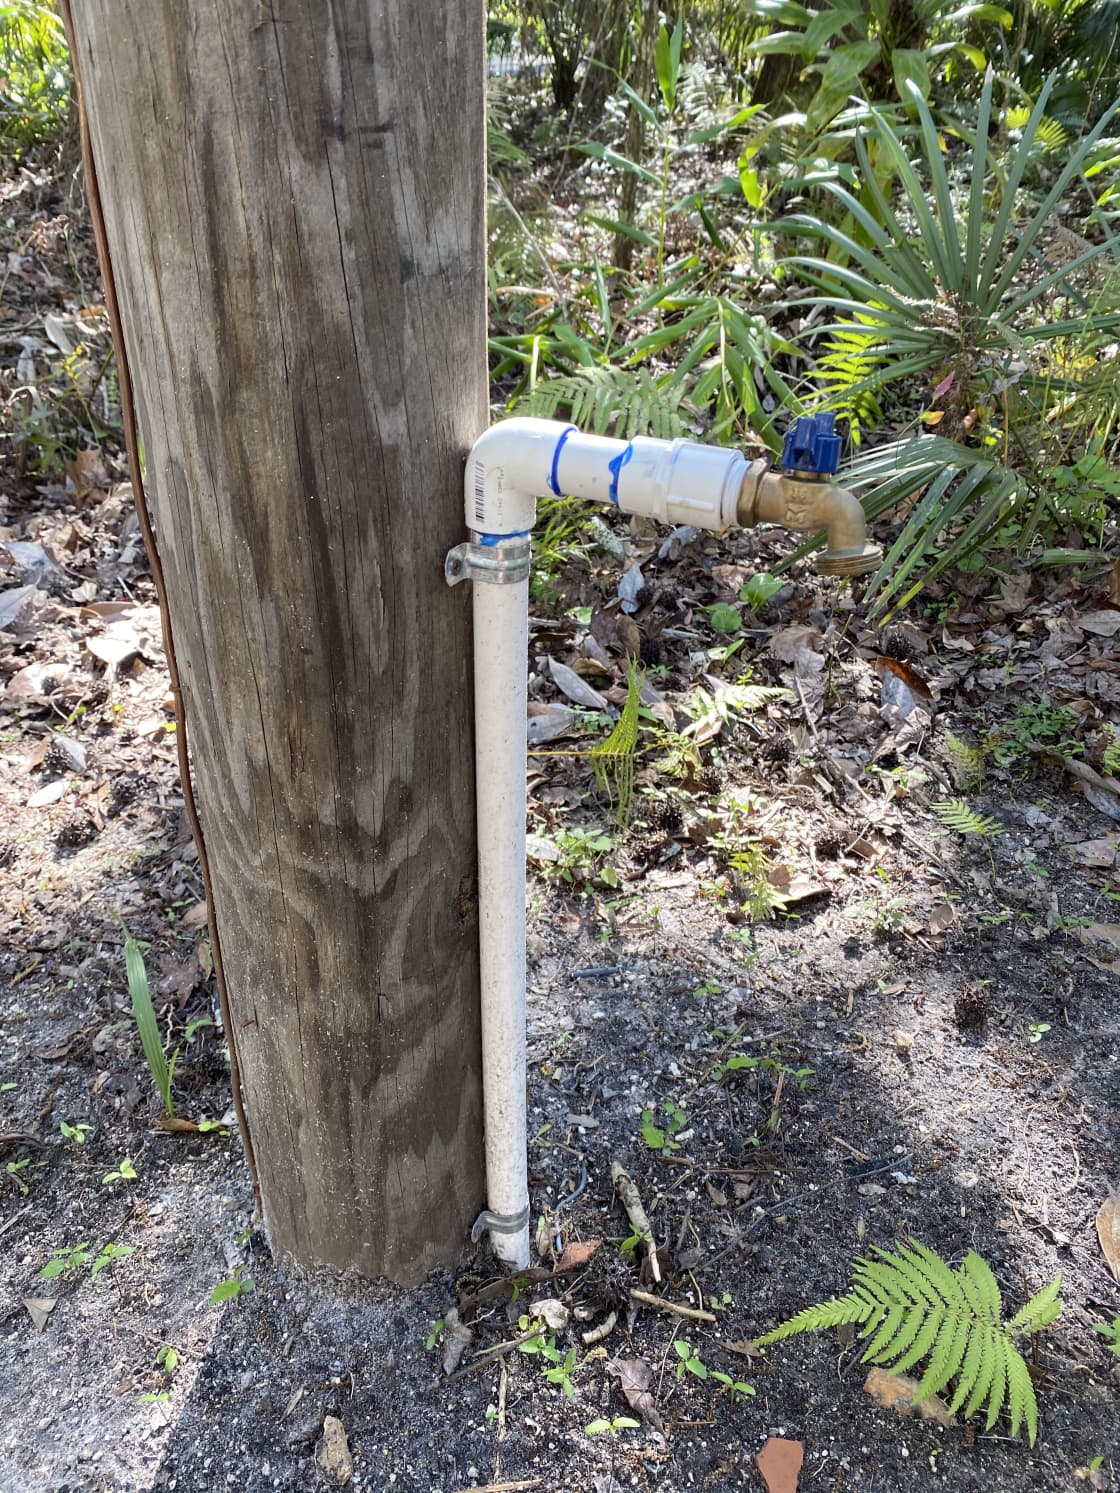 Water spigot at camp site. 